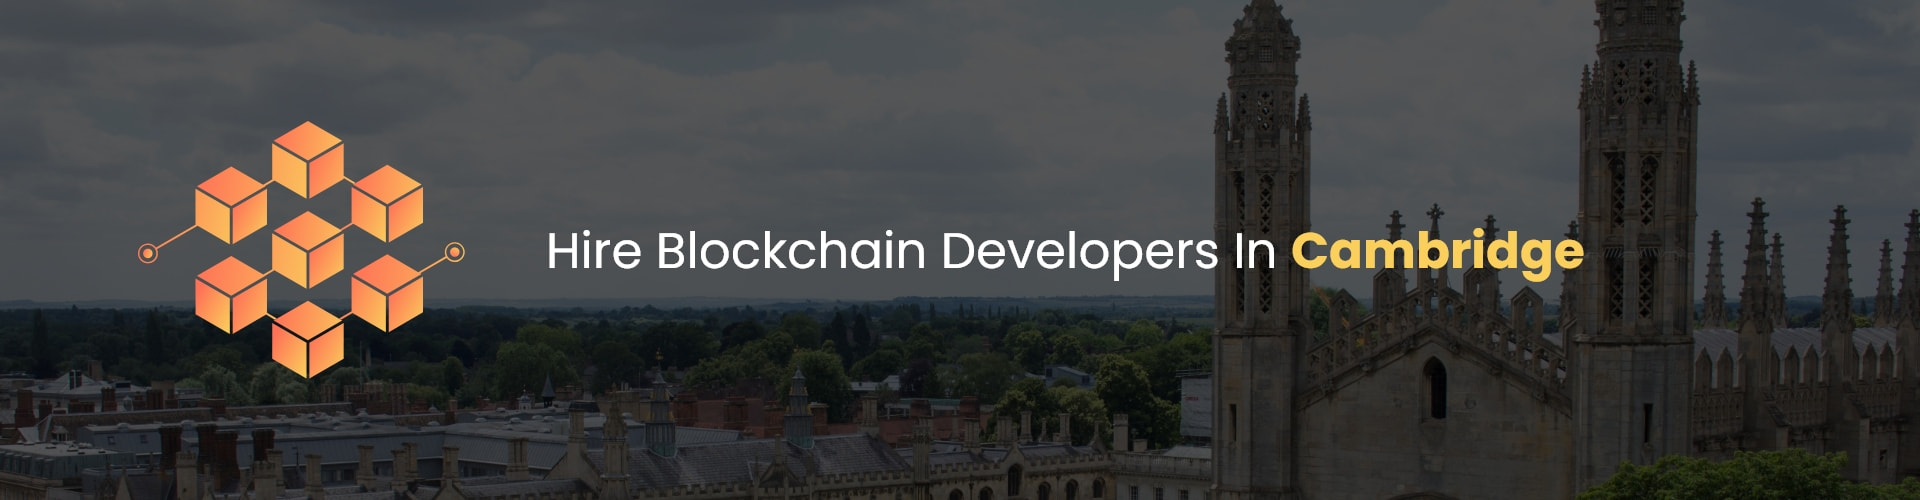 hire blockchain developers in cambridge